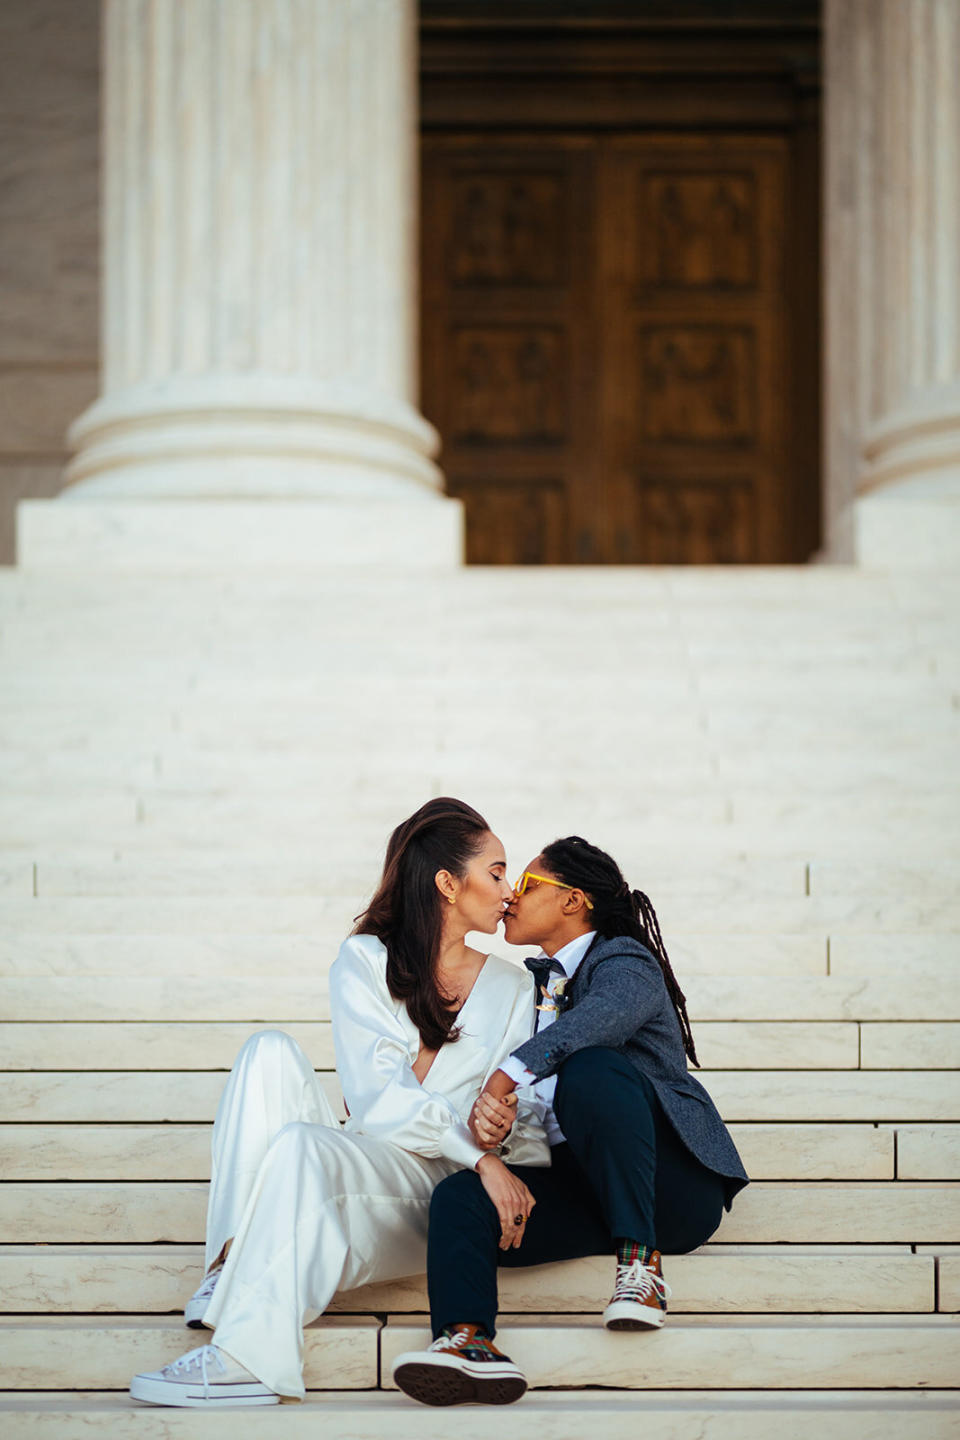 The couple called their elopement "a bright spot amid the heaviness of 2020." (Photo: <a href="https://shawneecustalow.com/" target="_blank">Shawnee Custalow</a>)